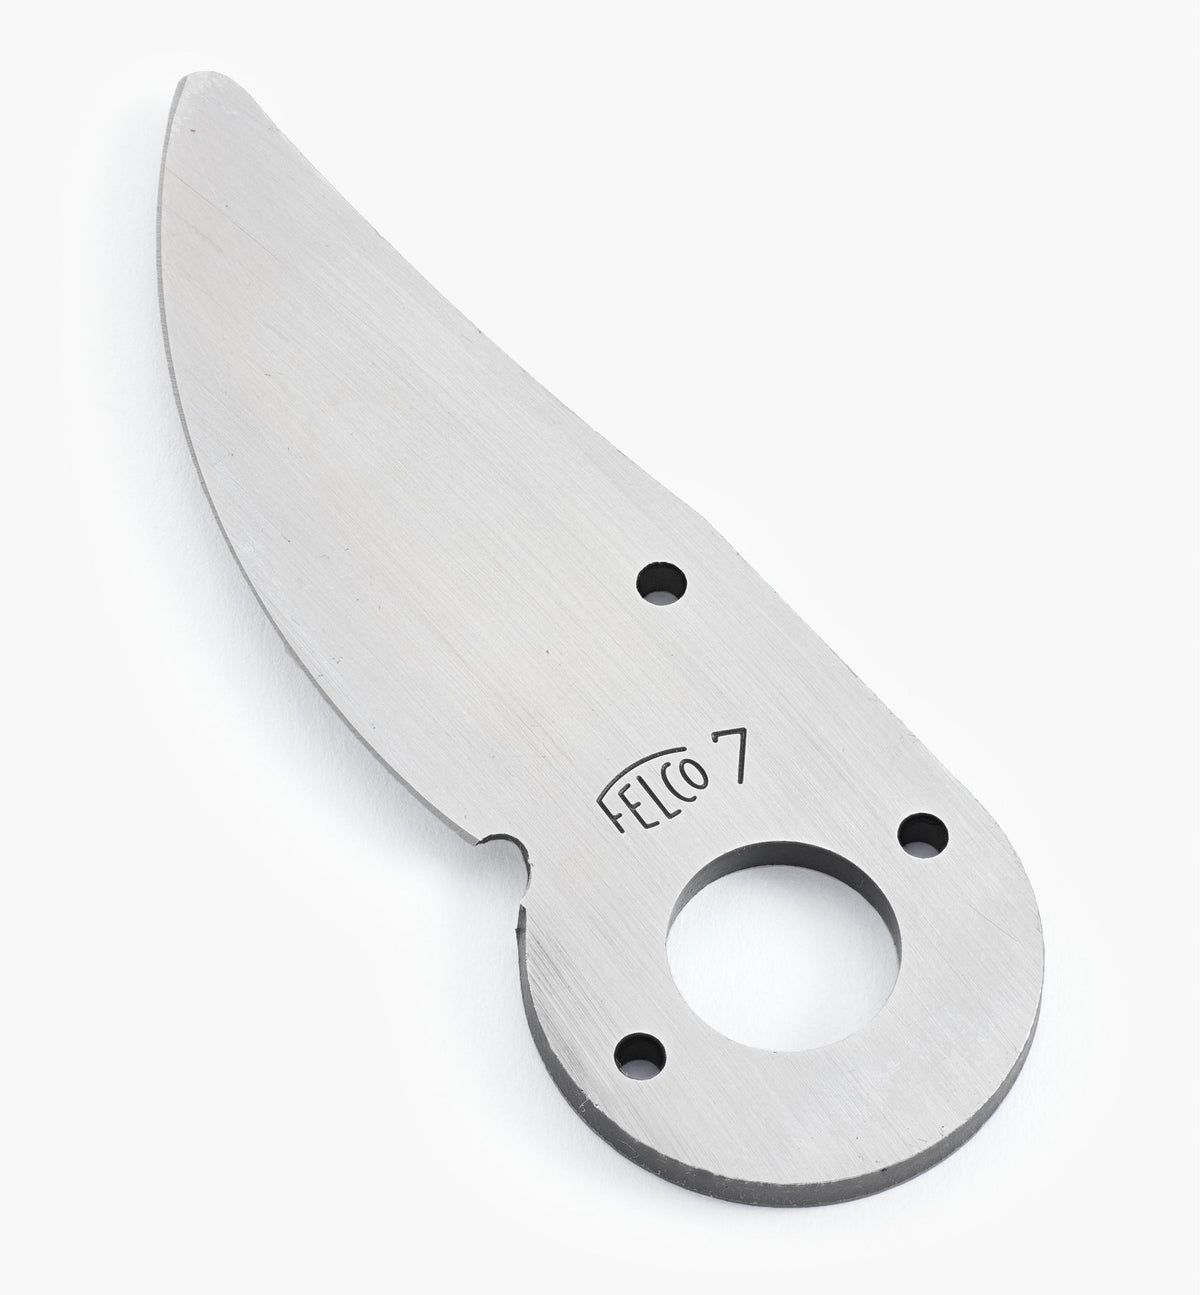 Felco® Replacement Cutting Blade Felco® #7,8